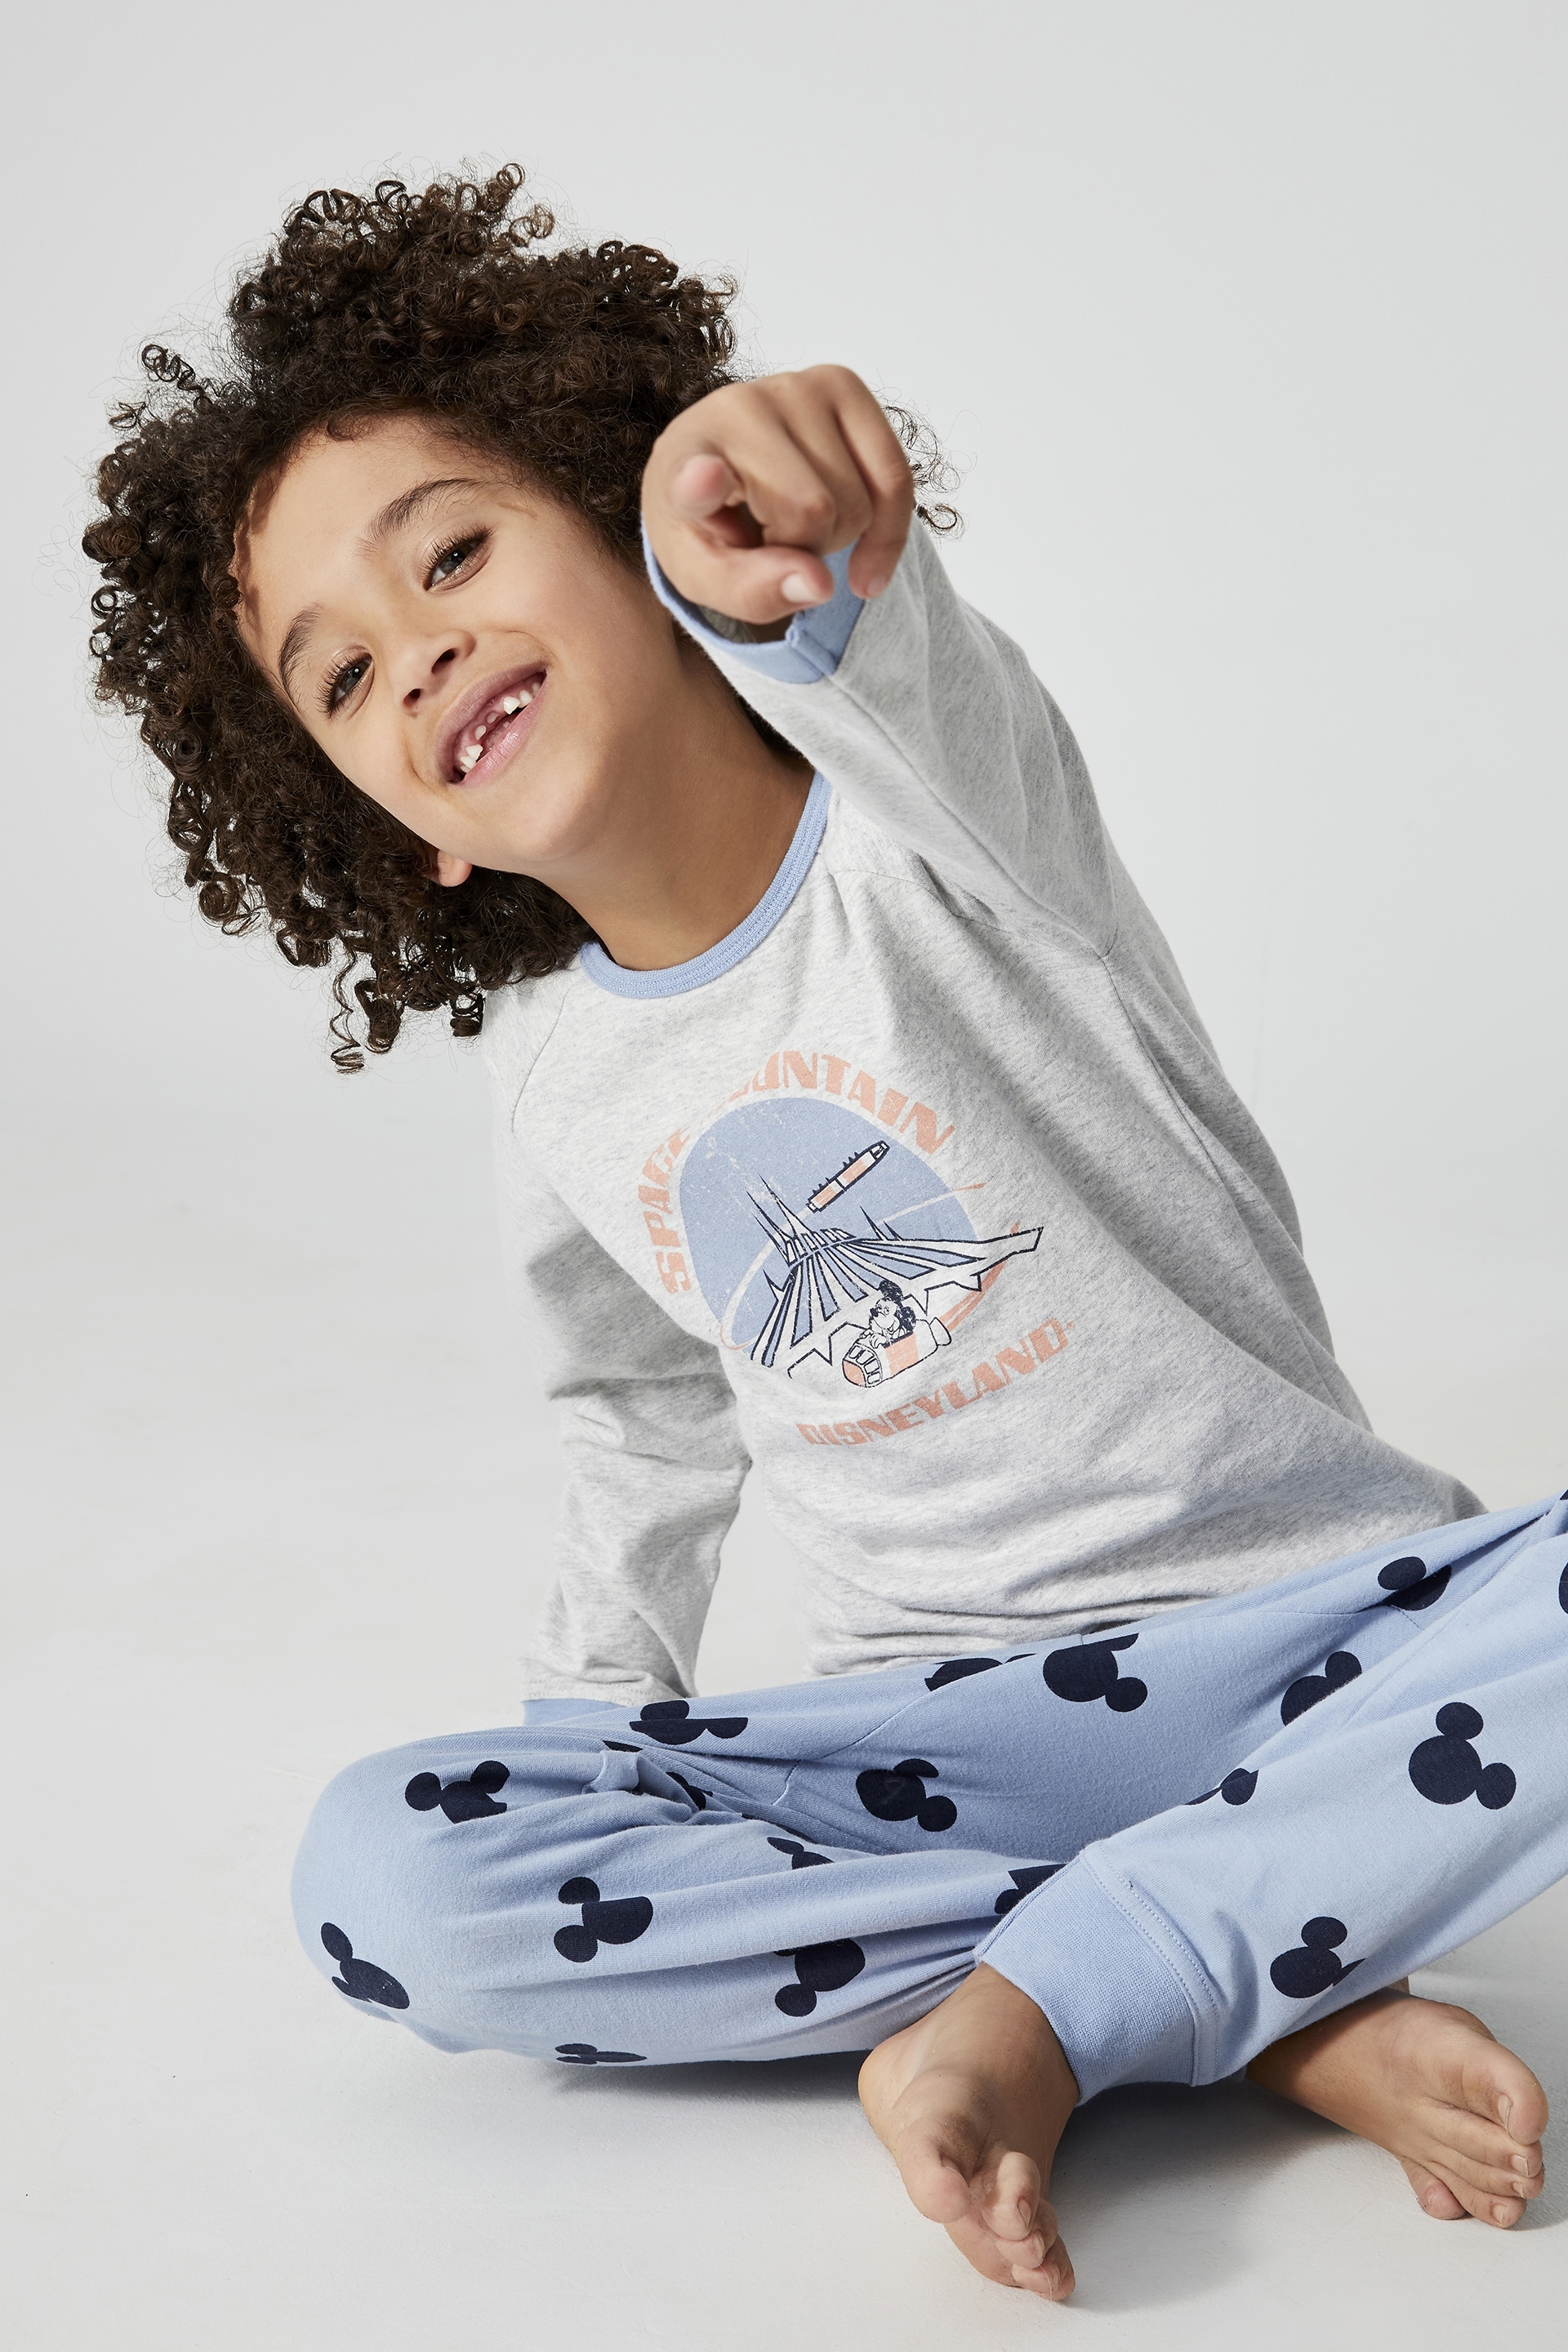 Cotton On Kids - Disneyland Oscar Long Sleeve Pyjama Set - Lcn dis disneyland space mountain/summer grey